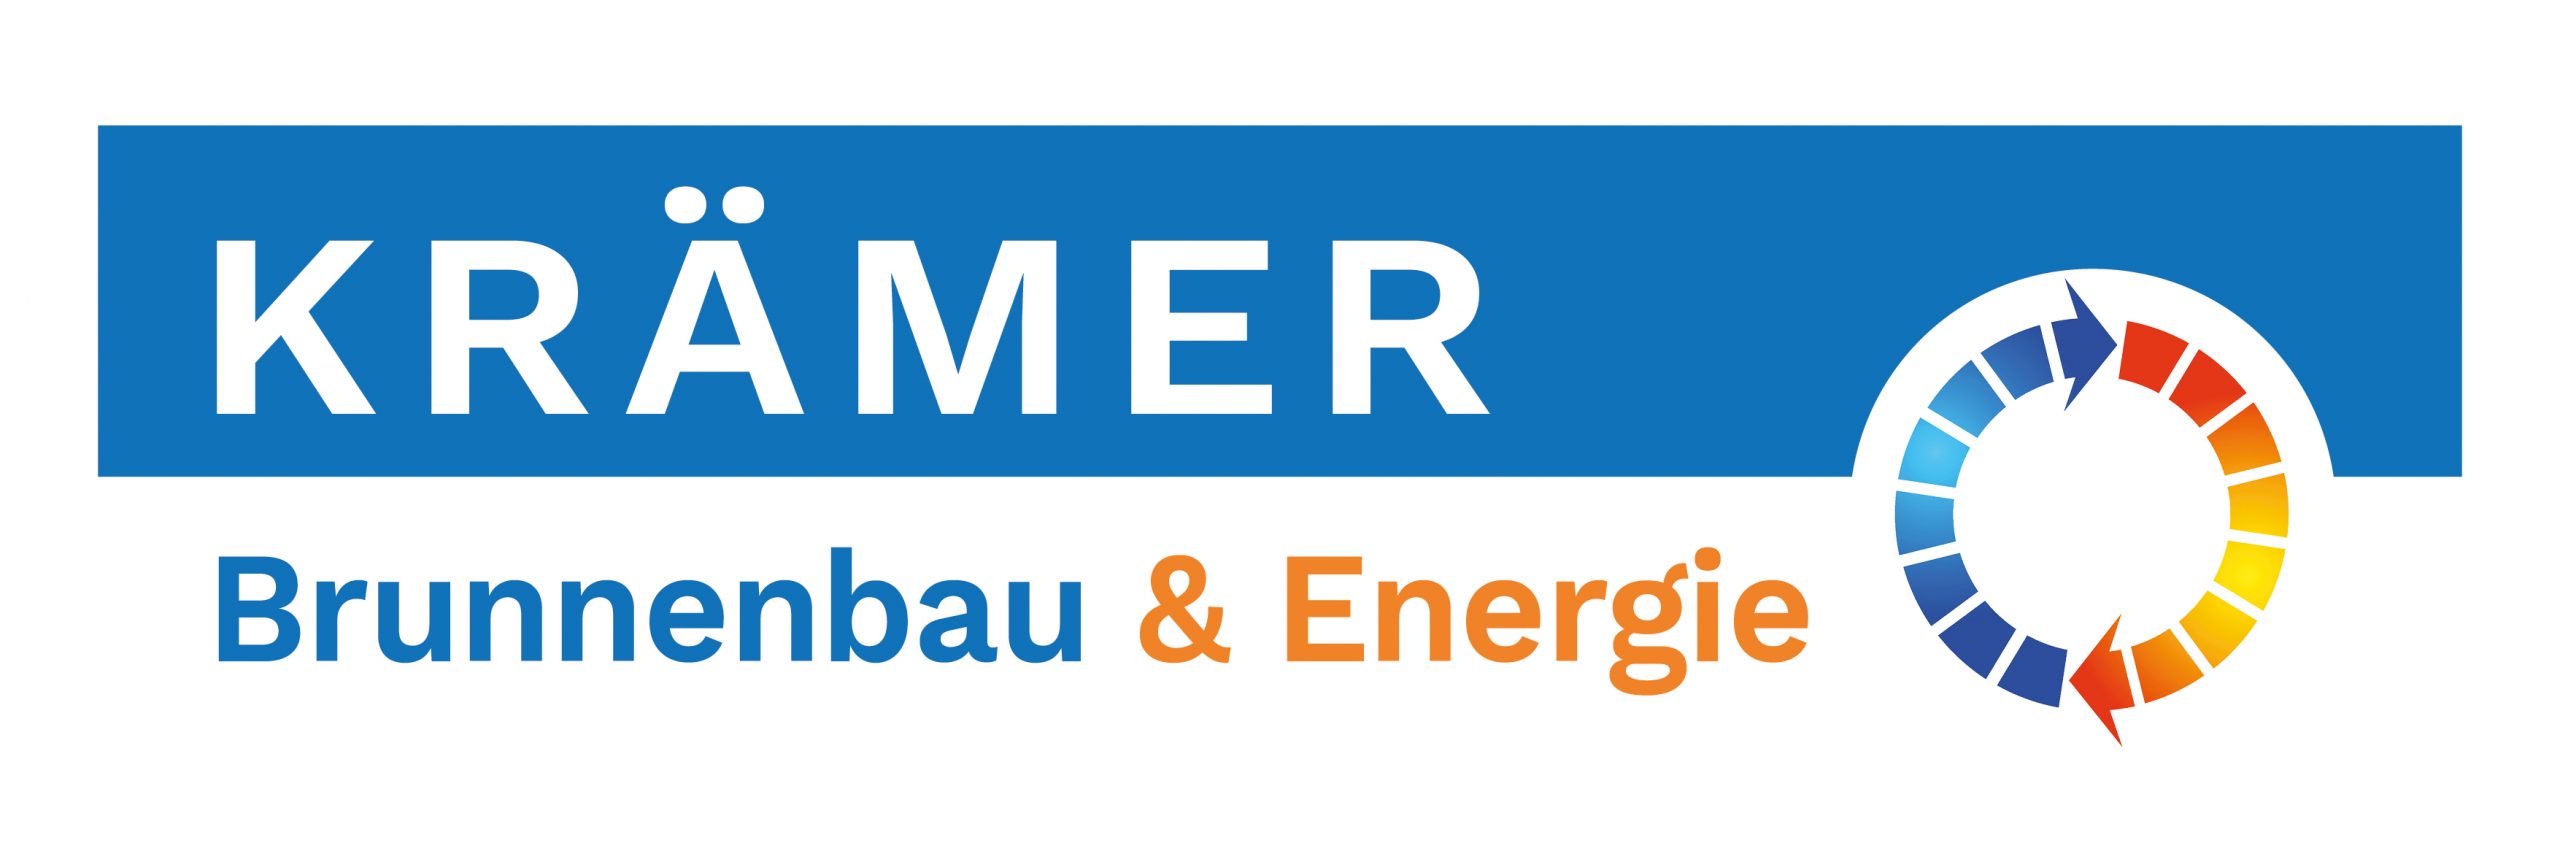 Krämer Brunnenbau & Energie GmbH